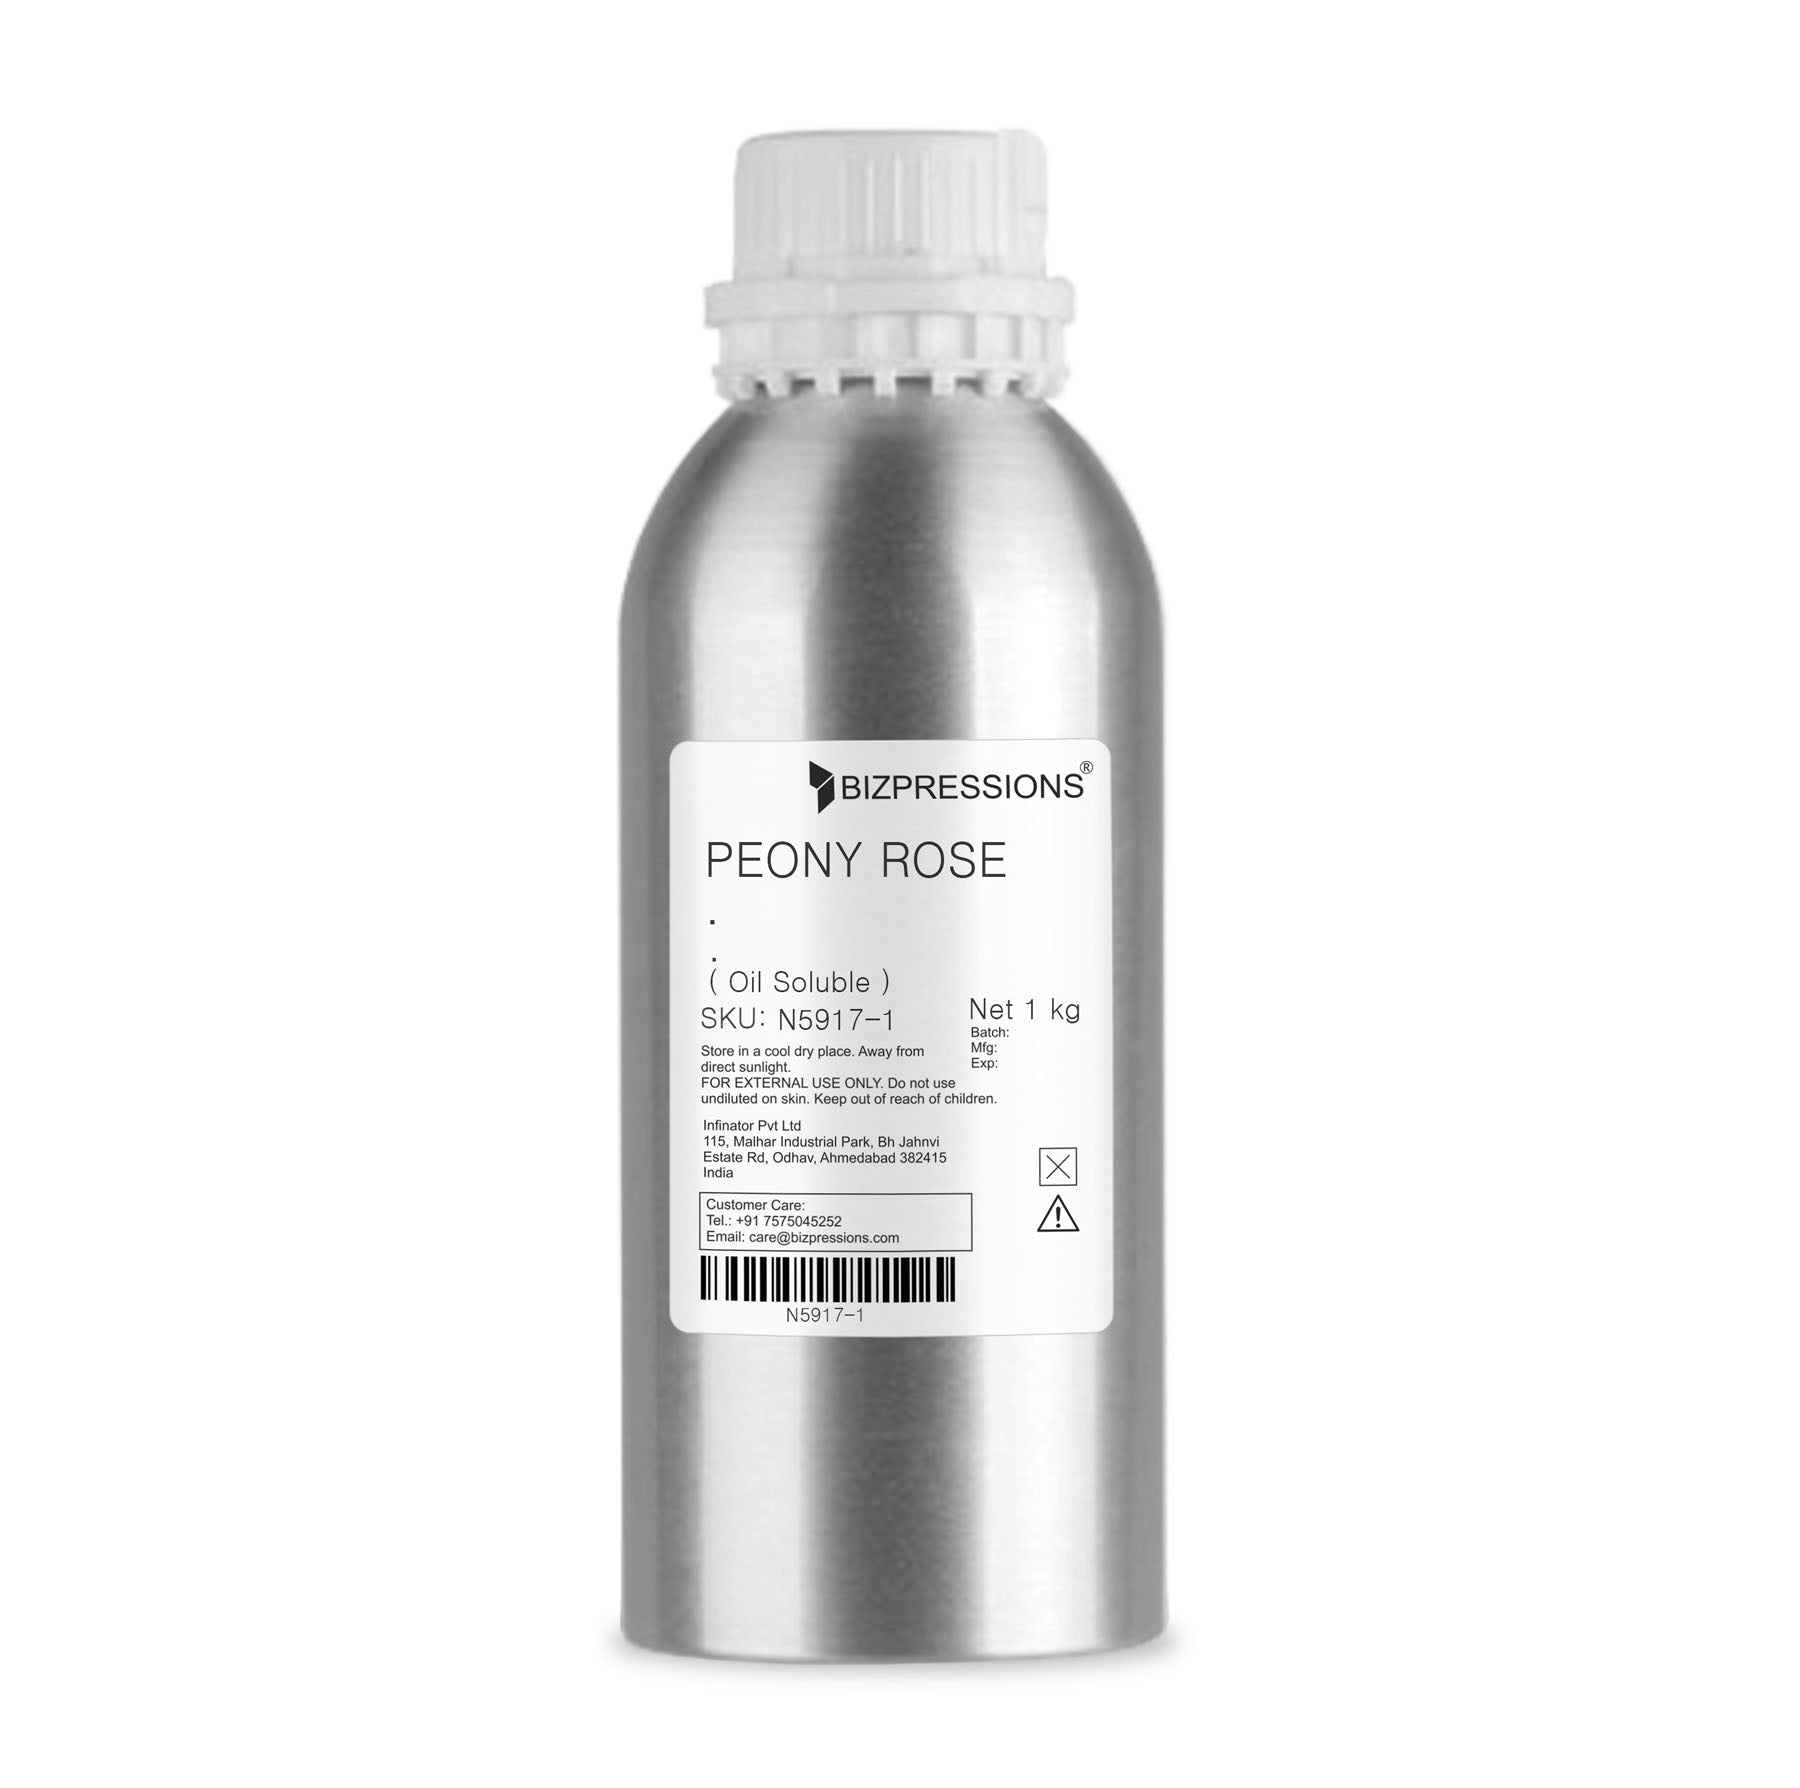 PEONY ROSE - Fragrance ( Oil Soluble ) - 1 kg